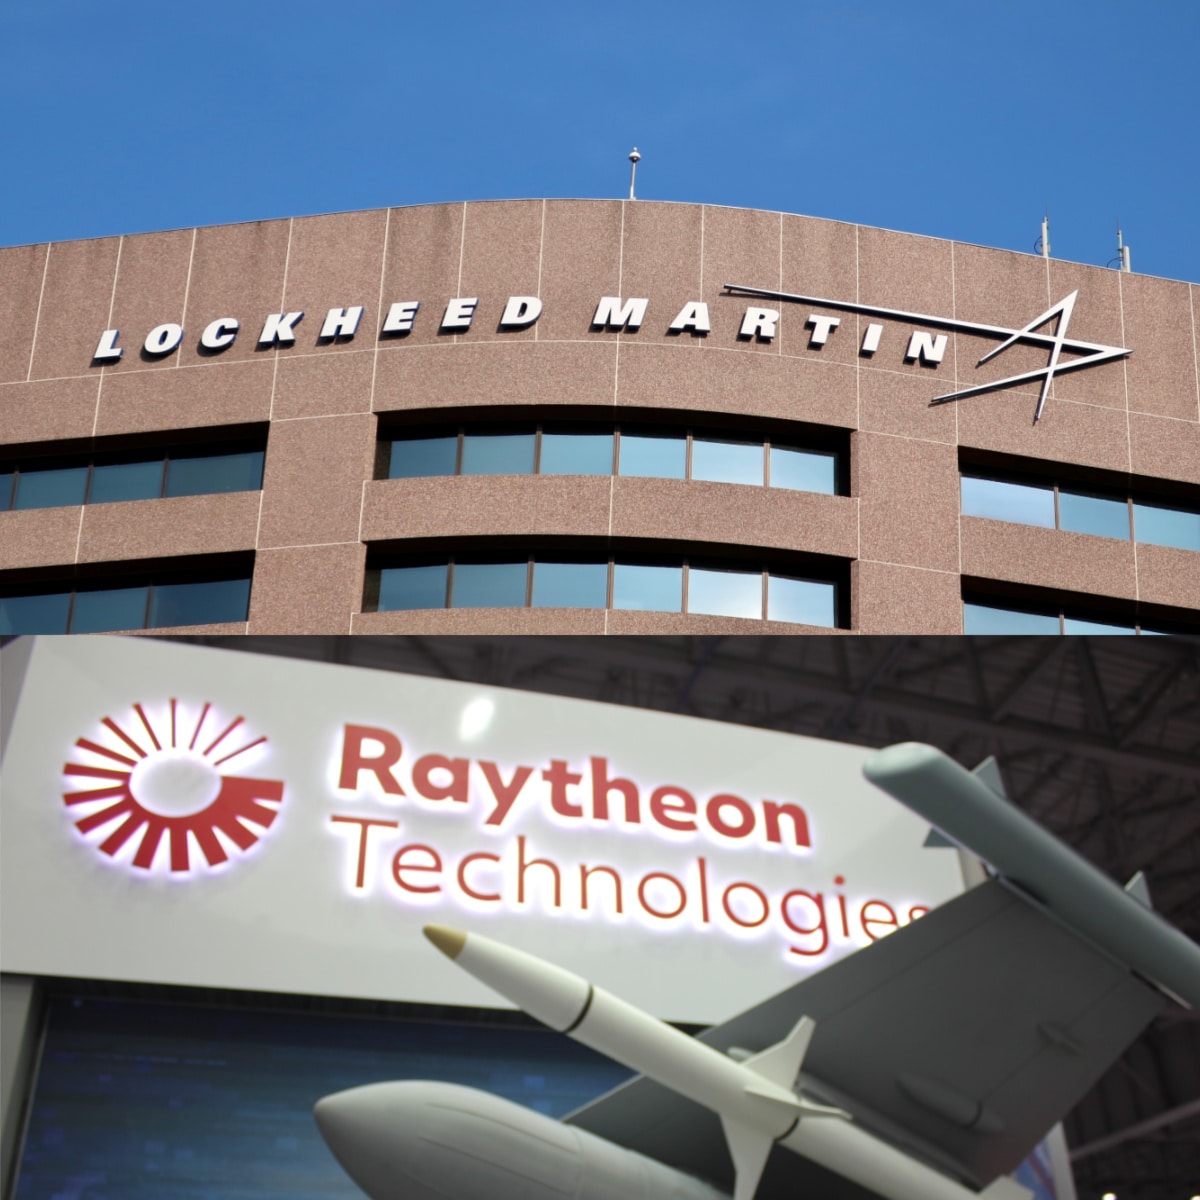 Lockheed Martin building and Raytheon Technologies logo photo collage.